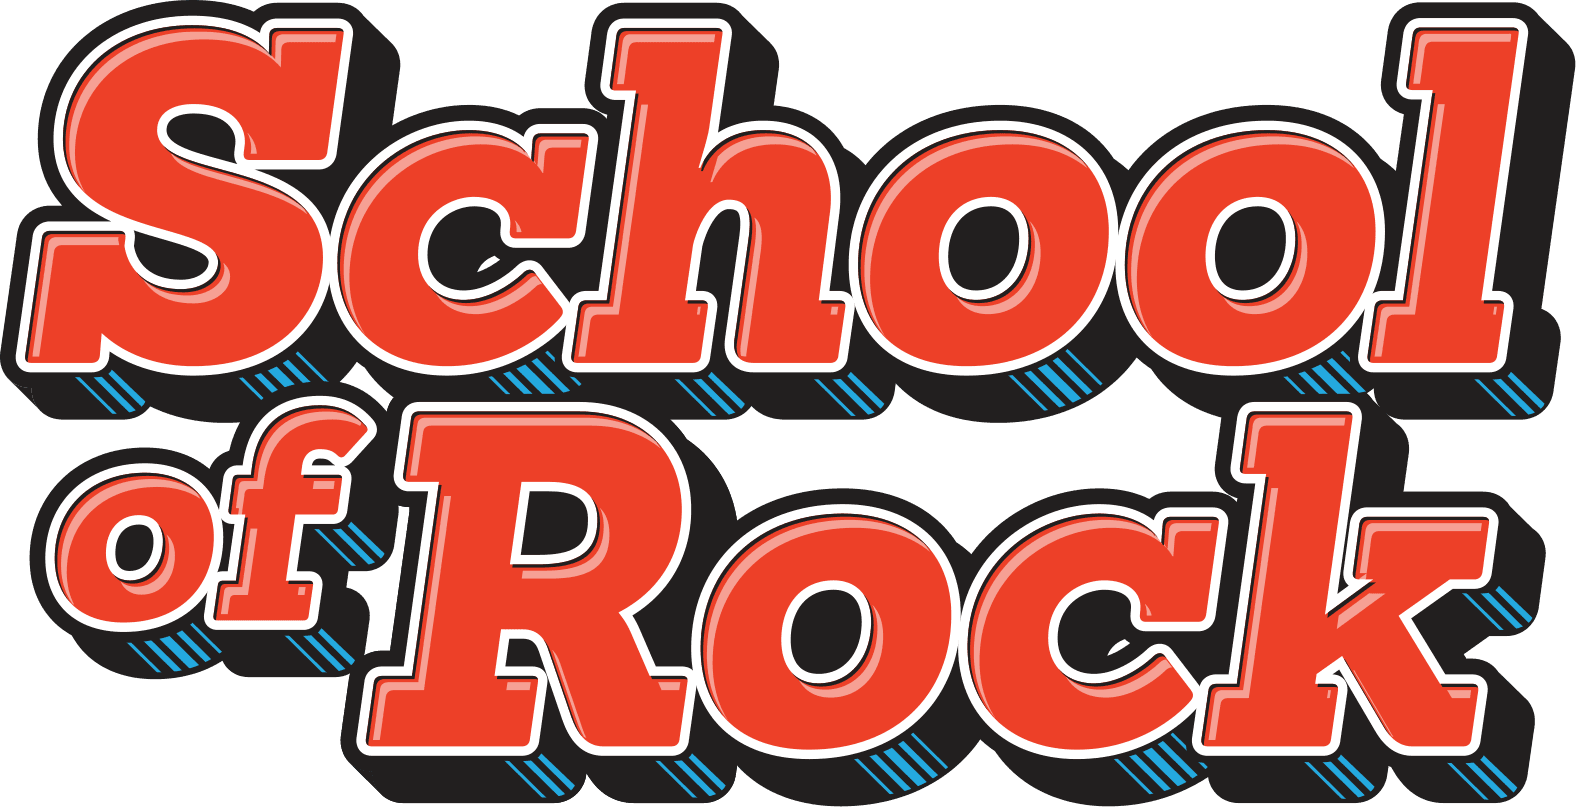 School of Rock logo